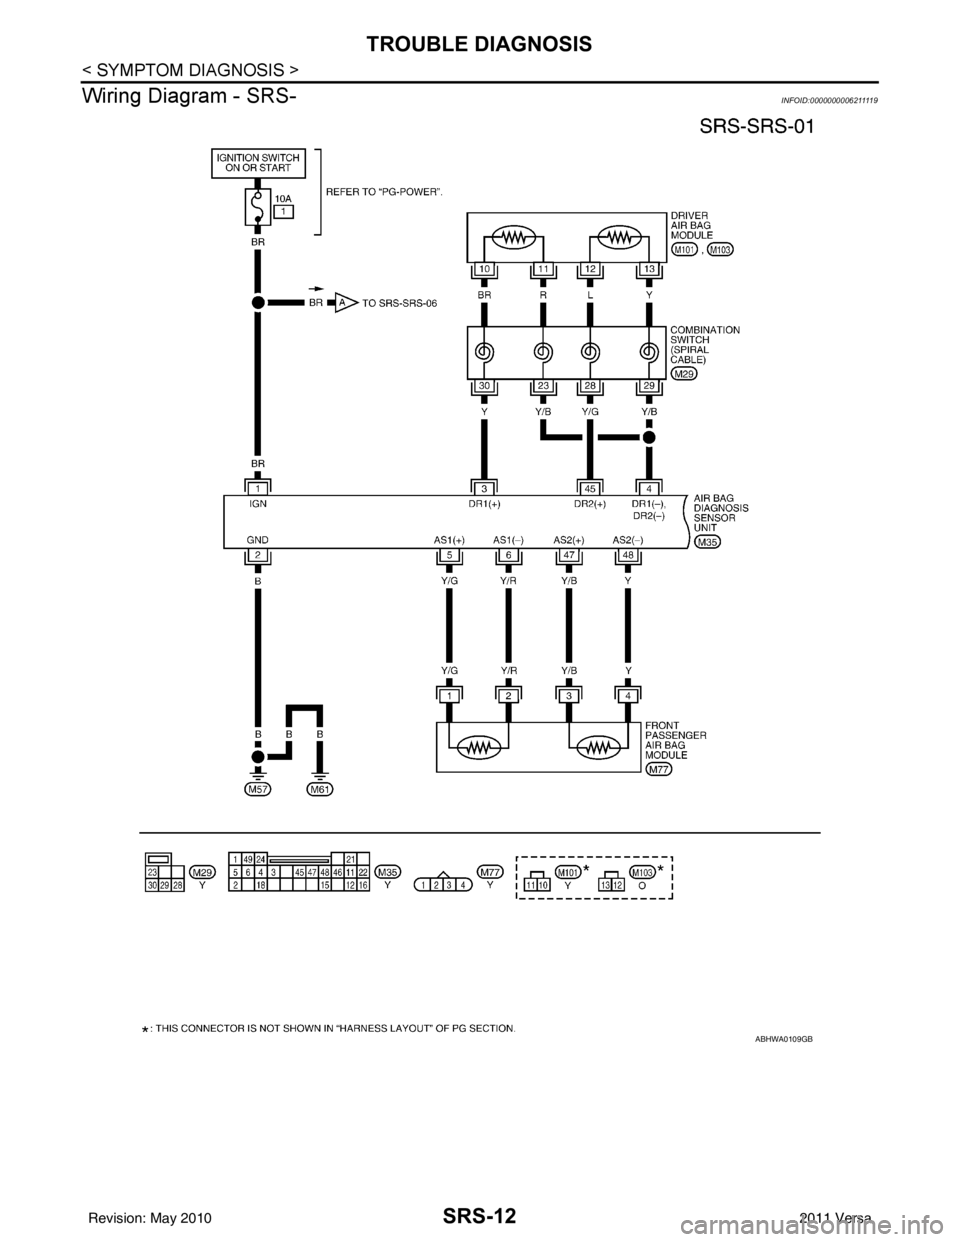 NISSAN LATIO 2011  Service Repair Manual SRS-12
< SYMPTOM DIAGNOSIS >
TROUBLE DIAGNOSIS
Wiring Diagram - SRS-
INFOID:0000000006211119
ABHWA0109GB
Revision: May 2010 2011 Versa 